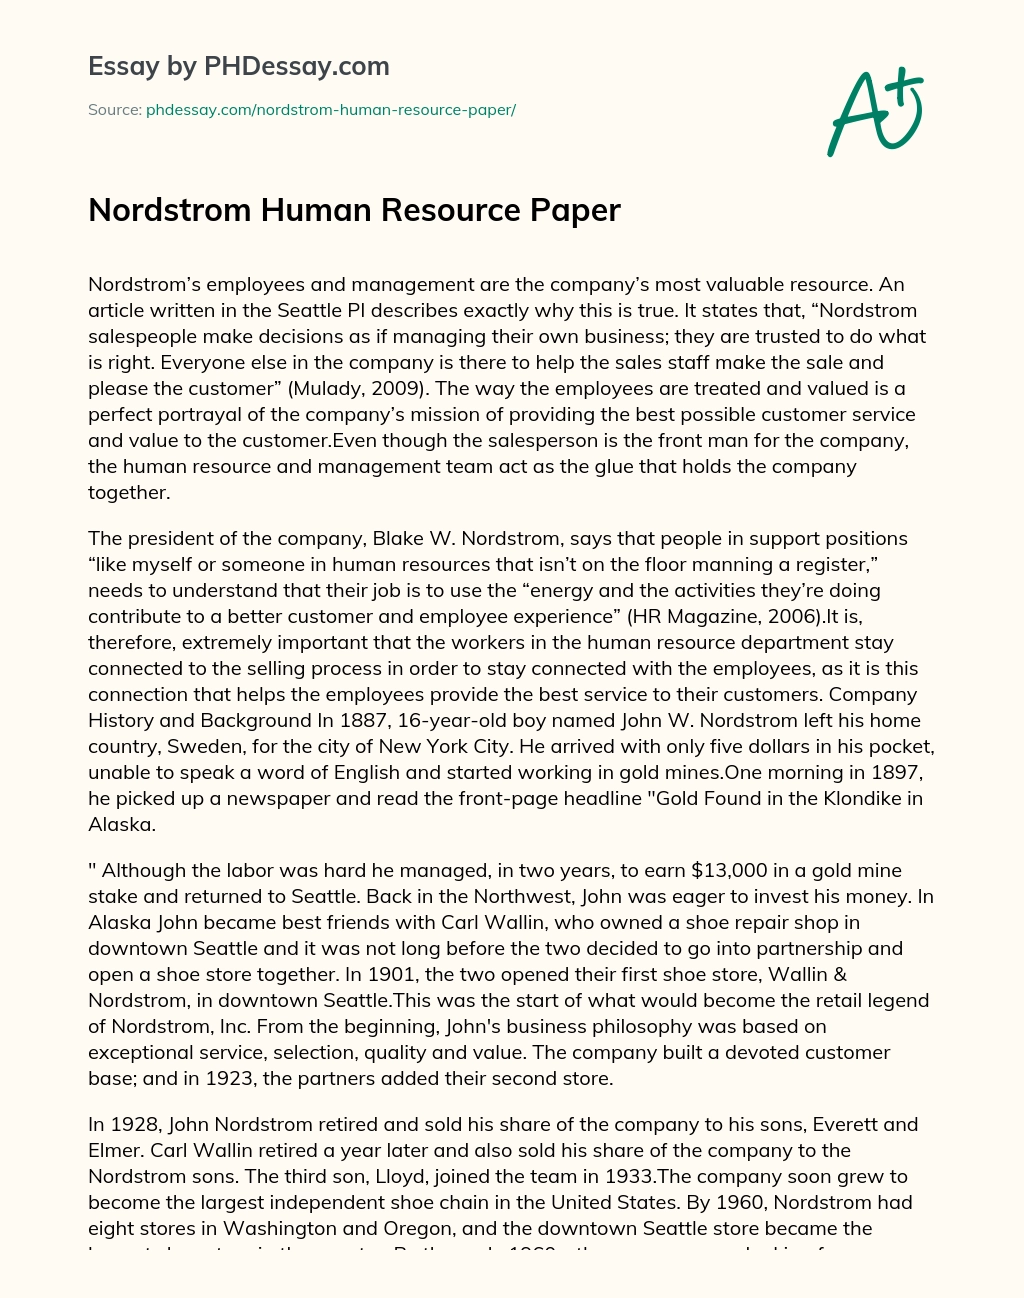 Nordstrom Human Resource Paper essay